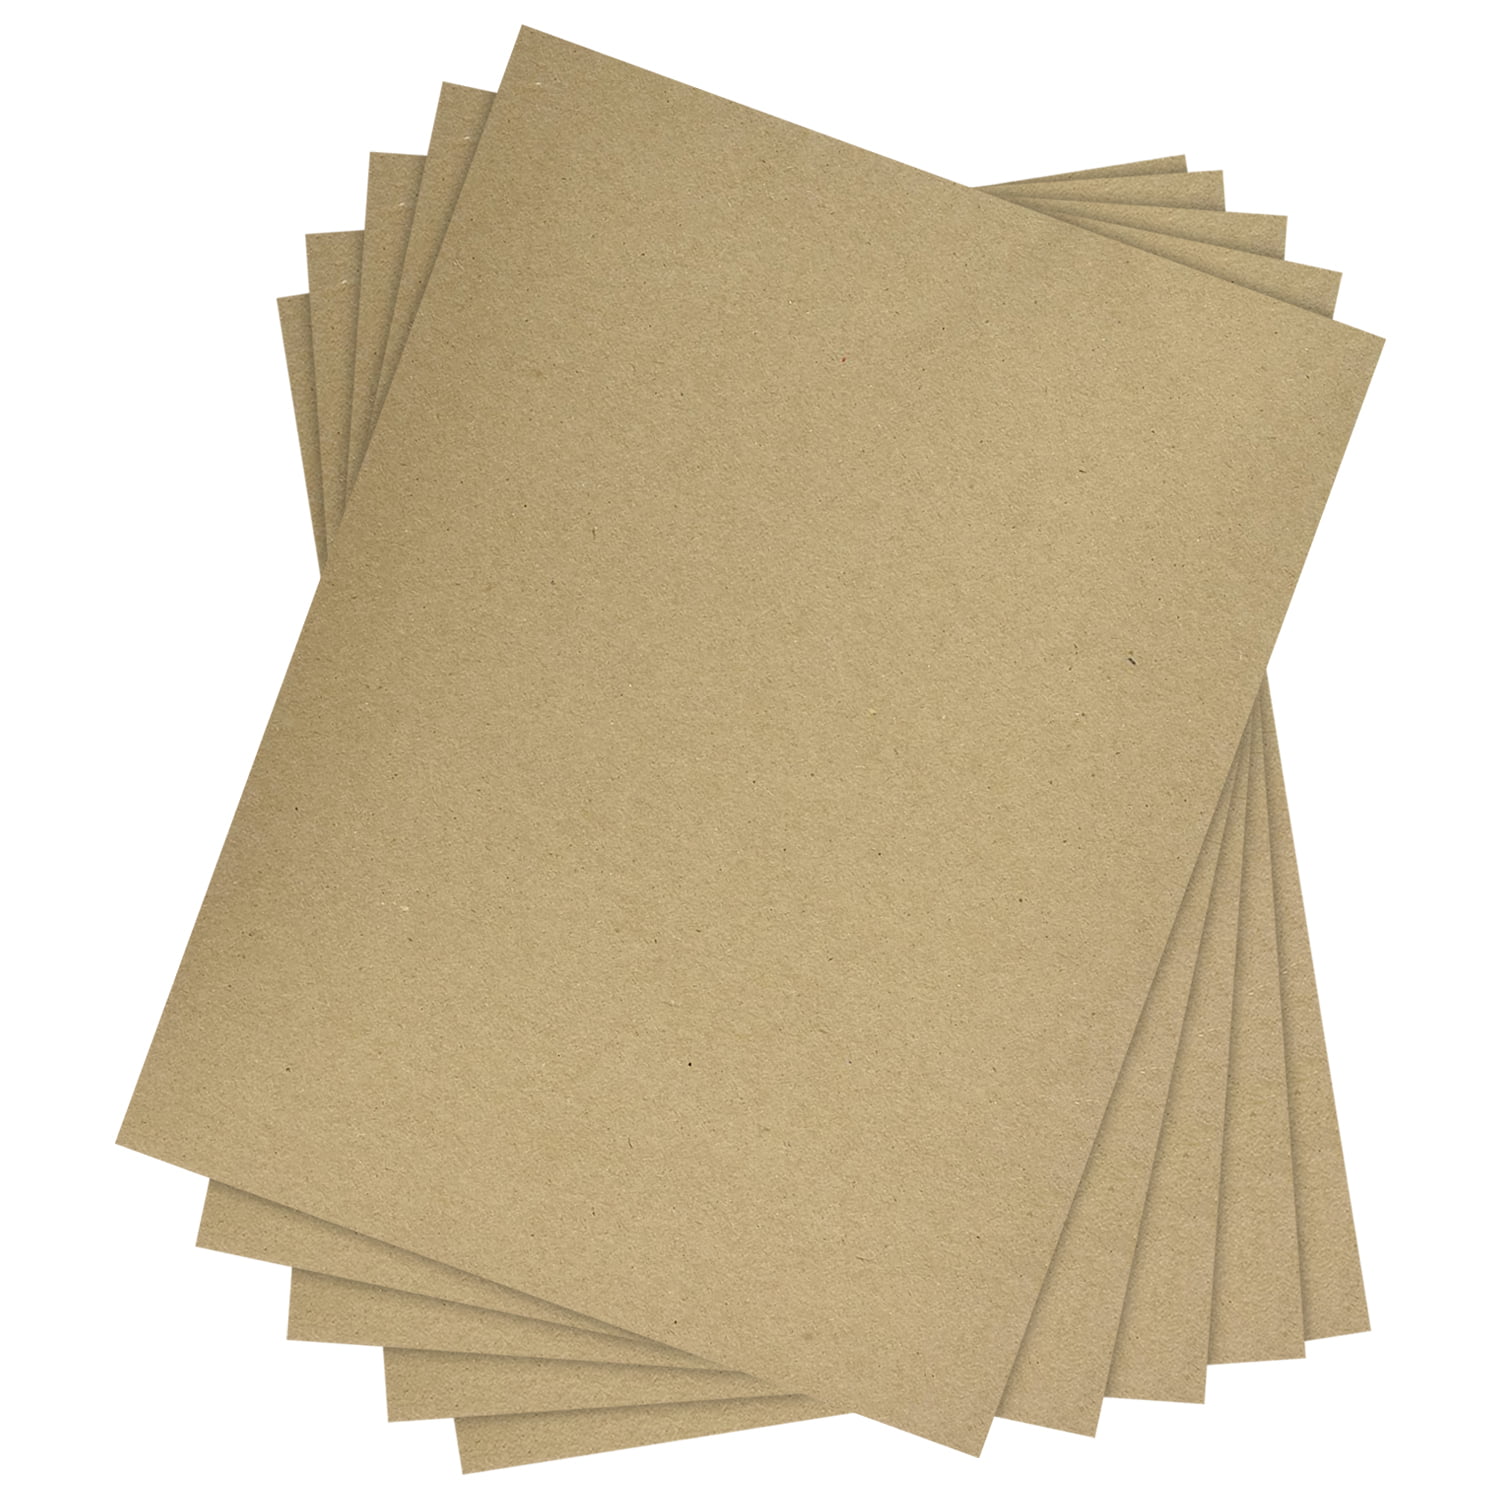 100 sheets chipboard cardboard photo backing 8x10 